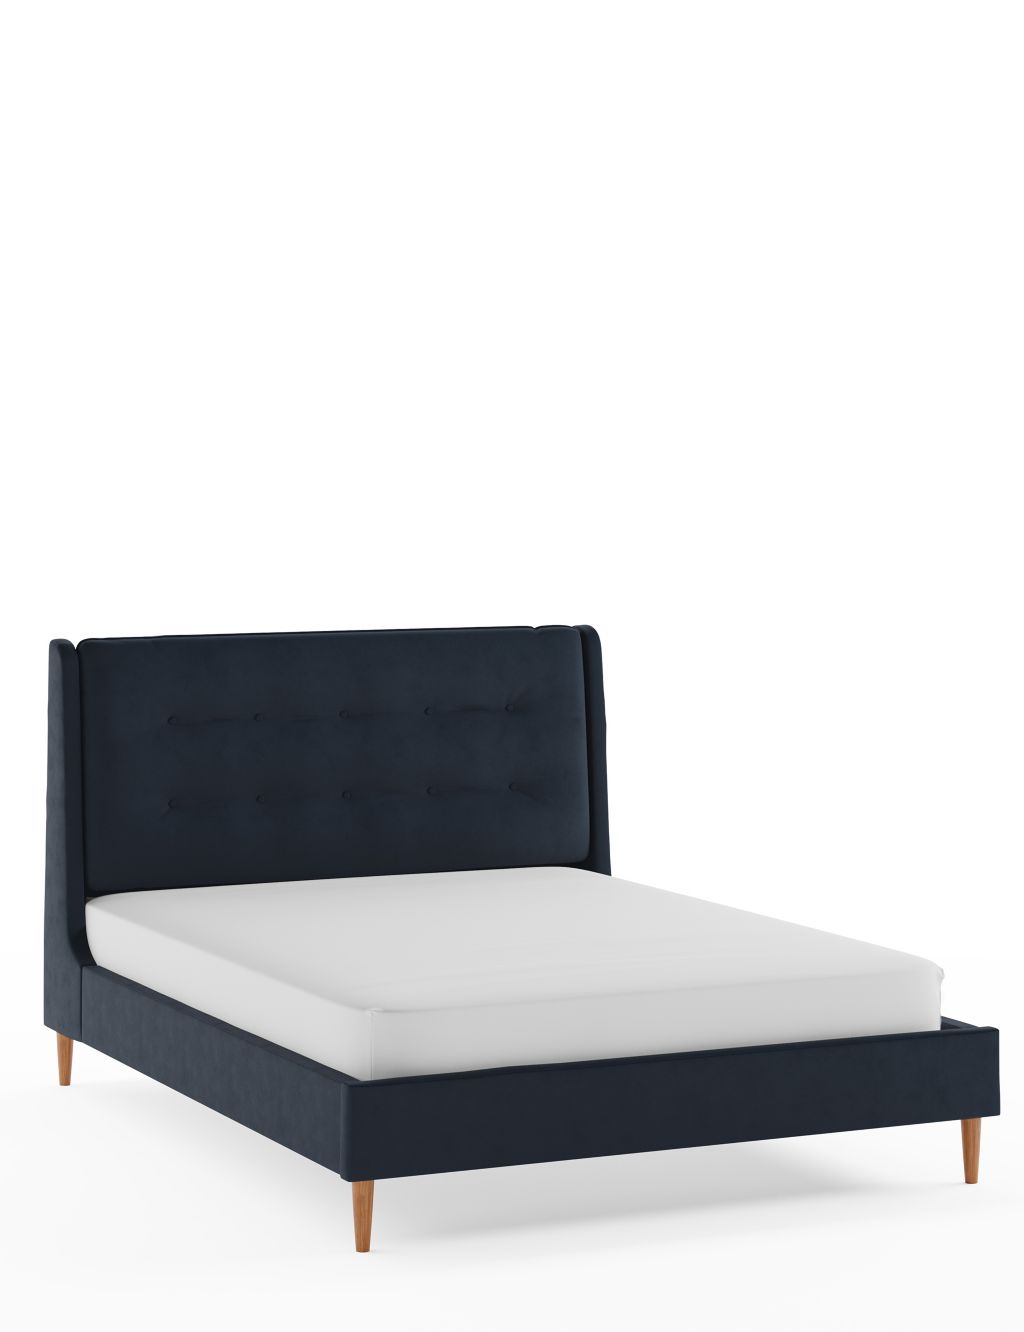 Monroe Upholstered Bed